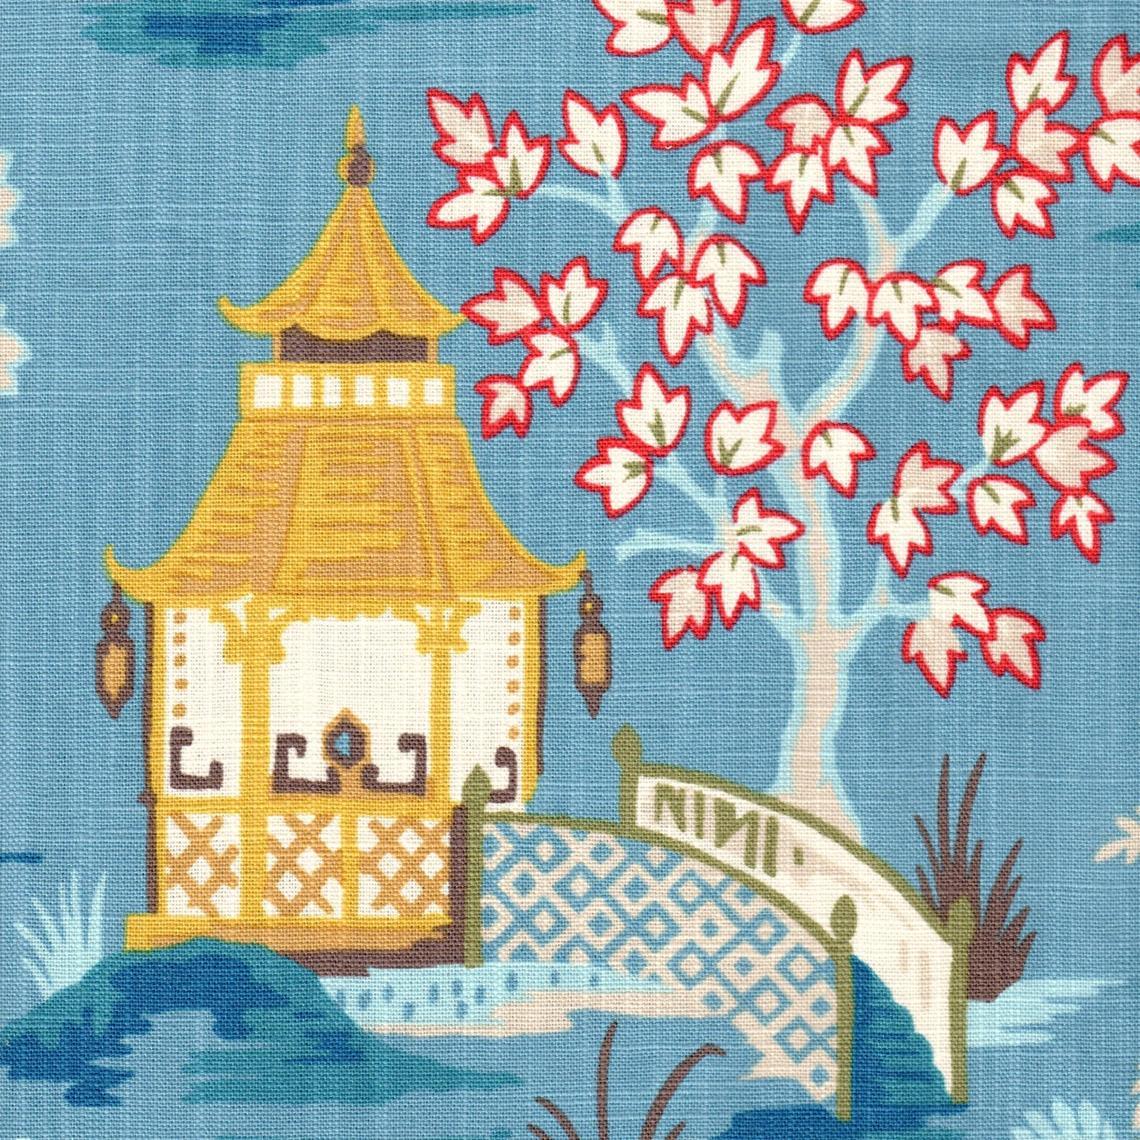 gathered crib skirt in shoji azure blue oriental toile, multicolor chinoiserie